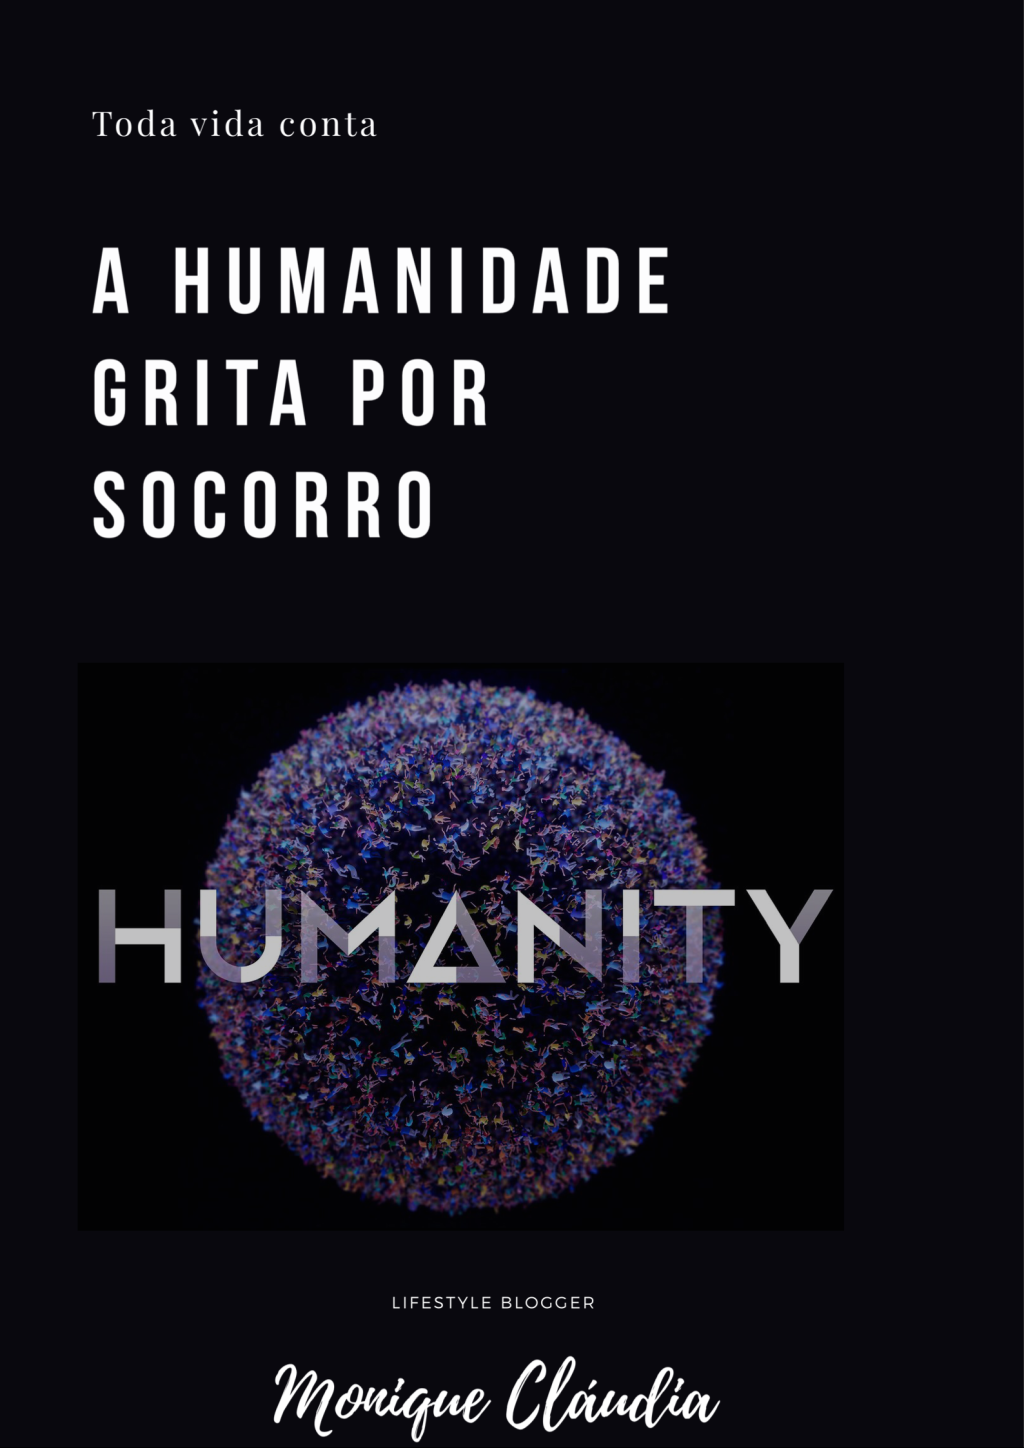 HUMANITY IS SCREAMING FOR HELP/A HUMANIDADE GRITA POR SOCORRO